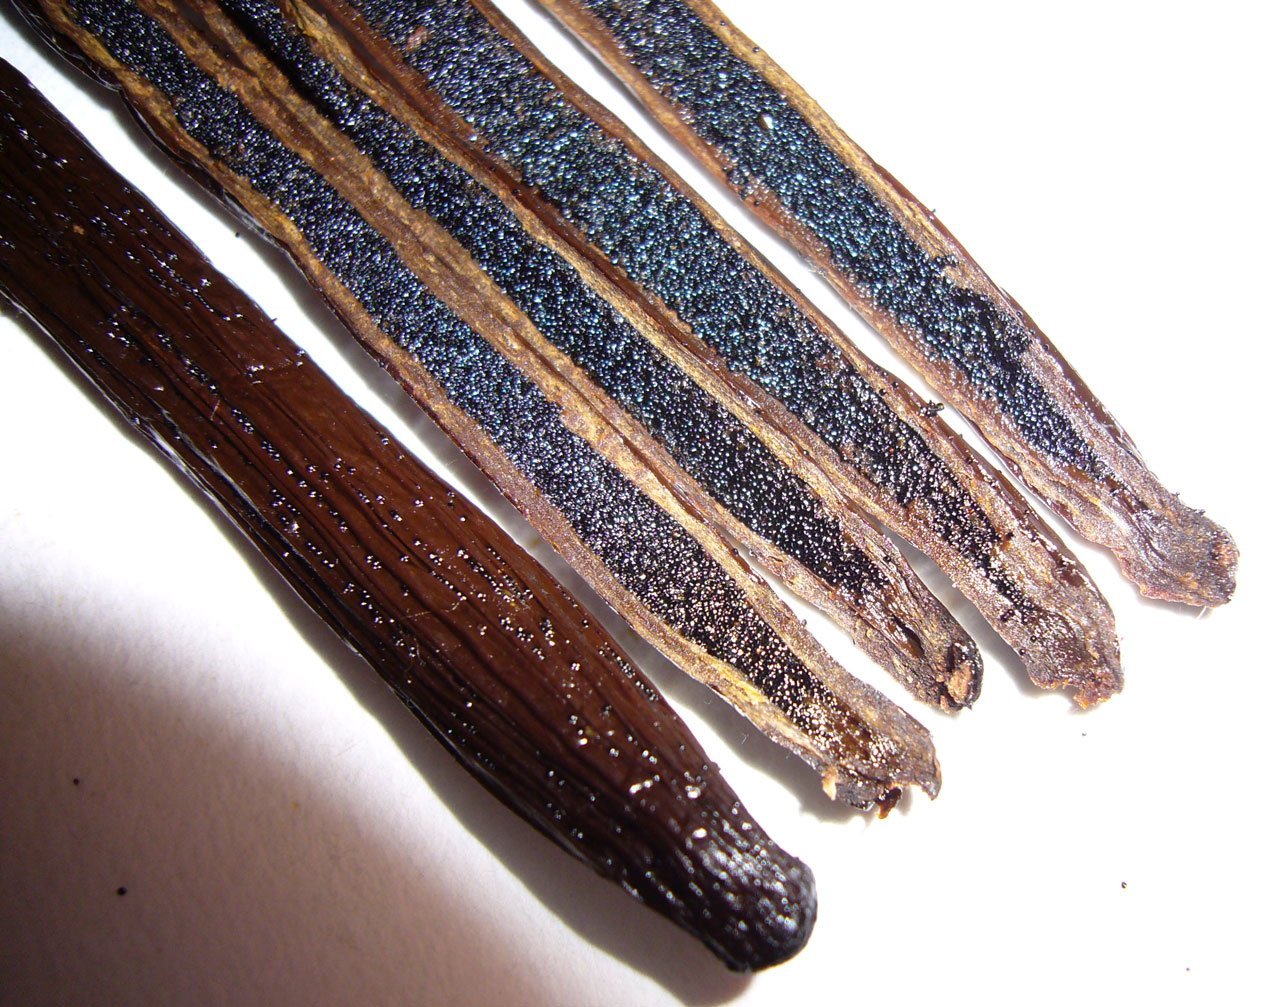 close up view of split vanilla bean seeds caviar